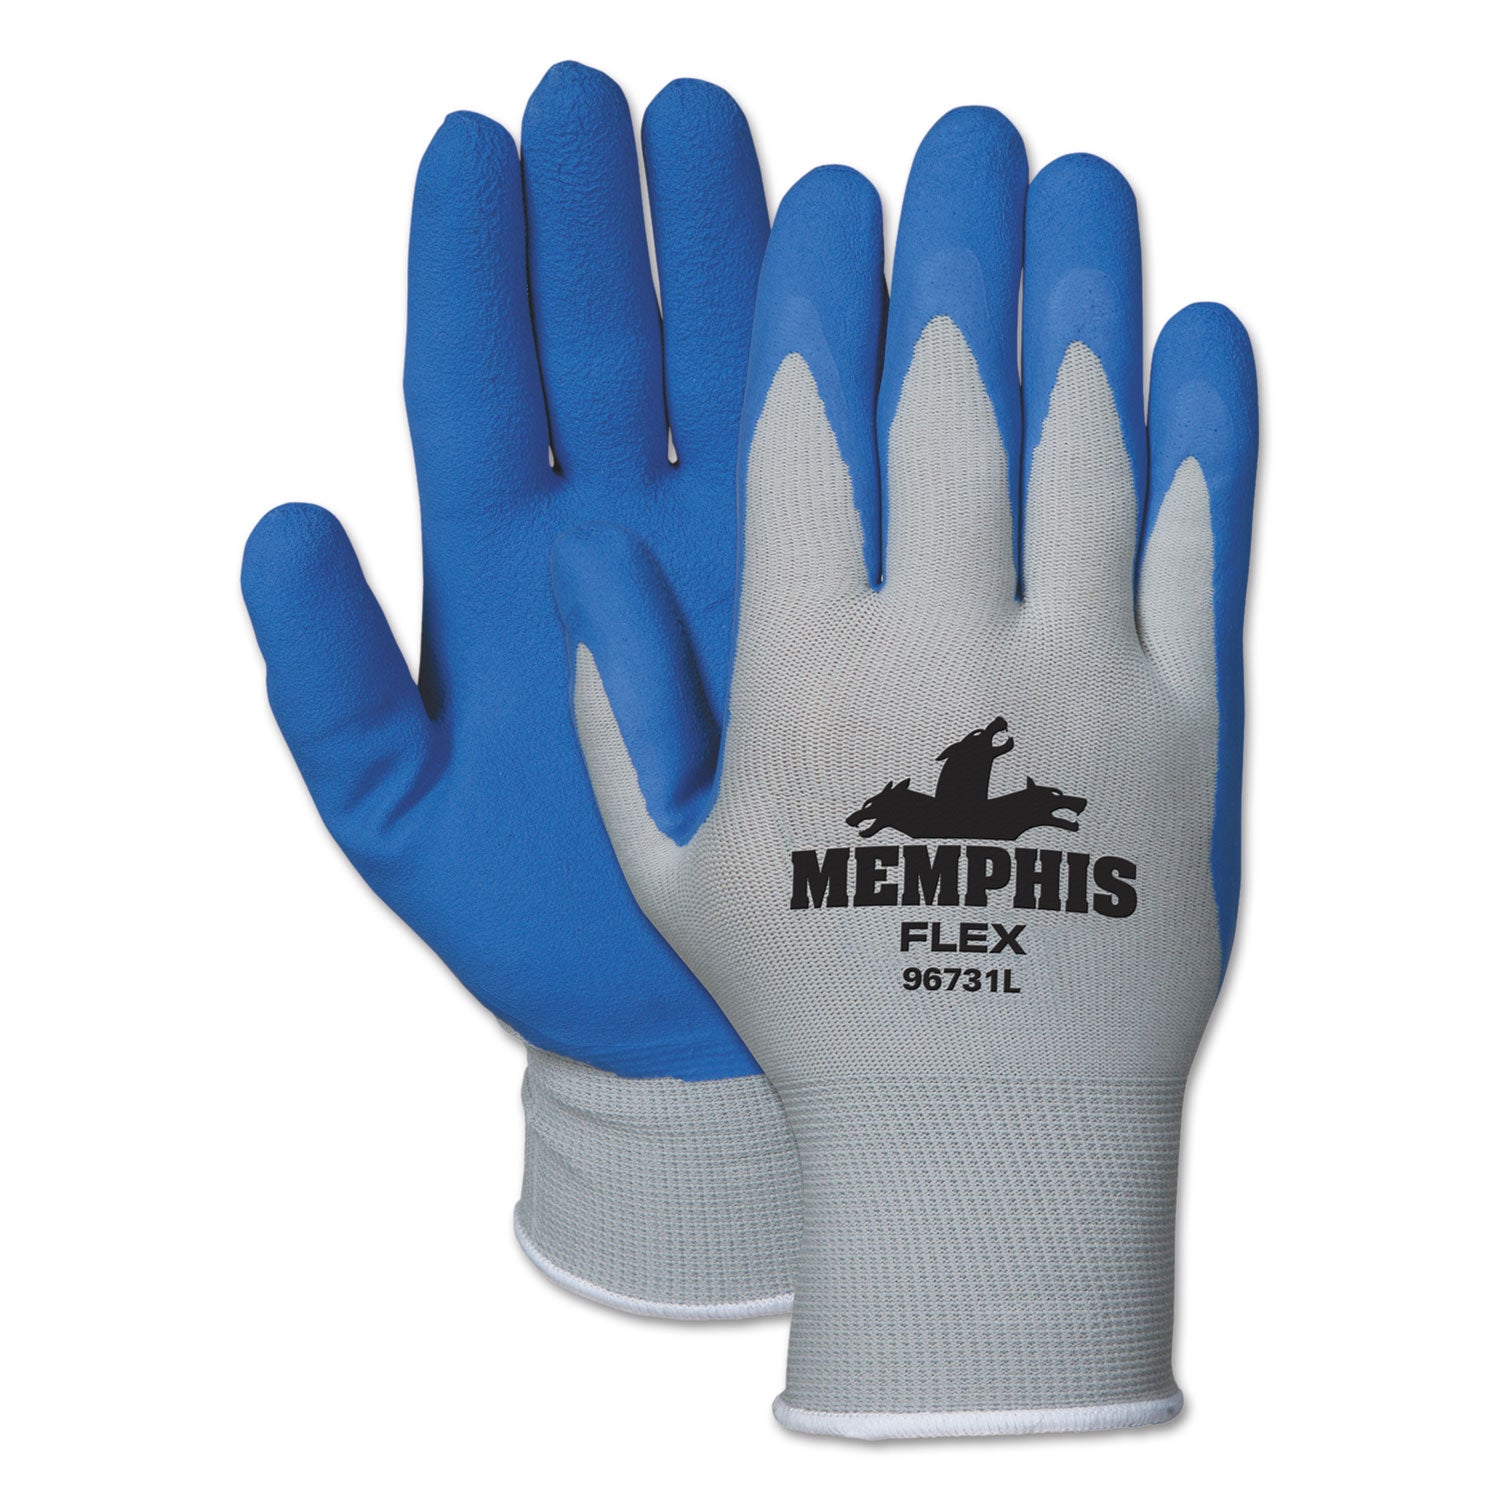 Memphis Flex Seamless Nylon Knit Gloves, X-Large, Blue/Gray, Dozen - 